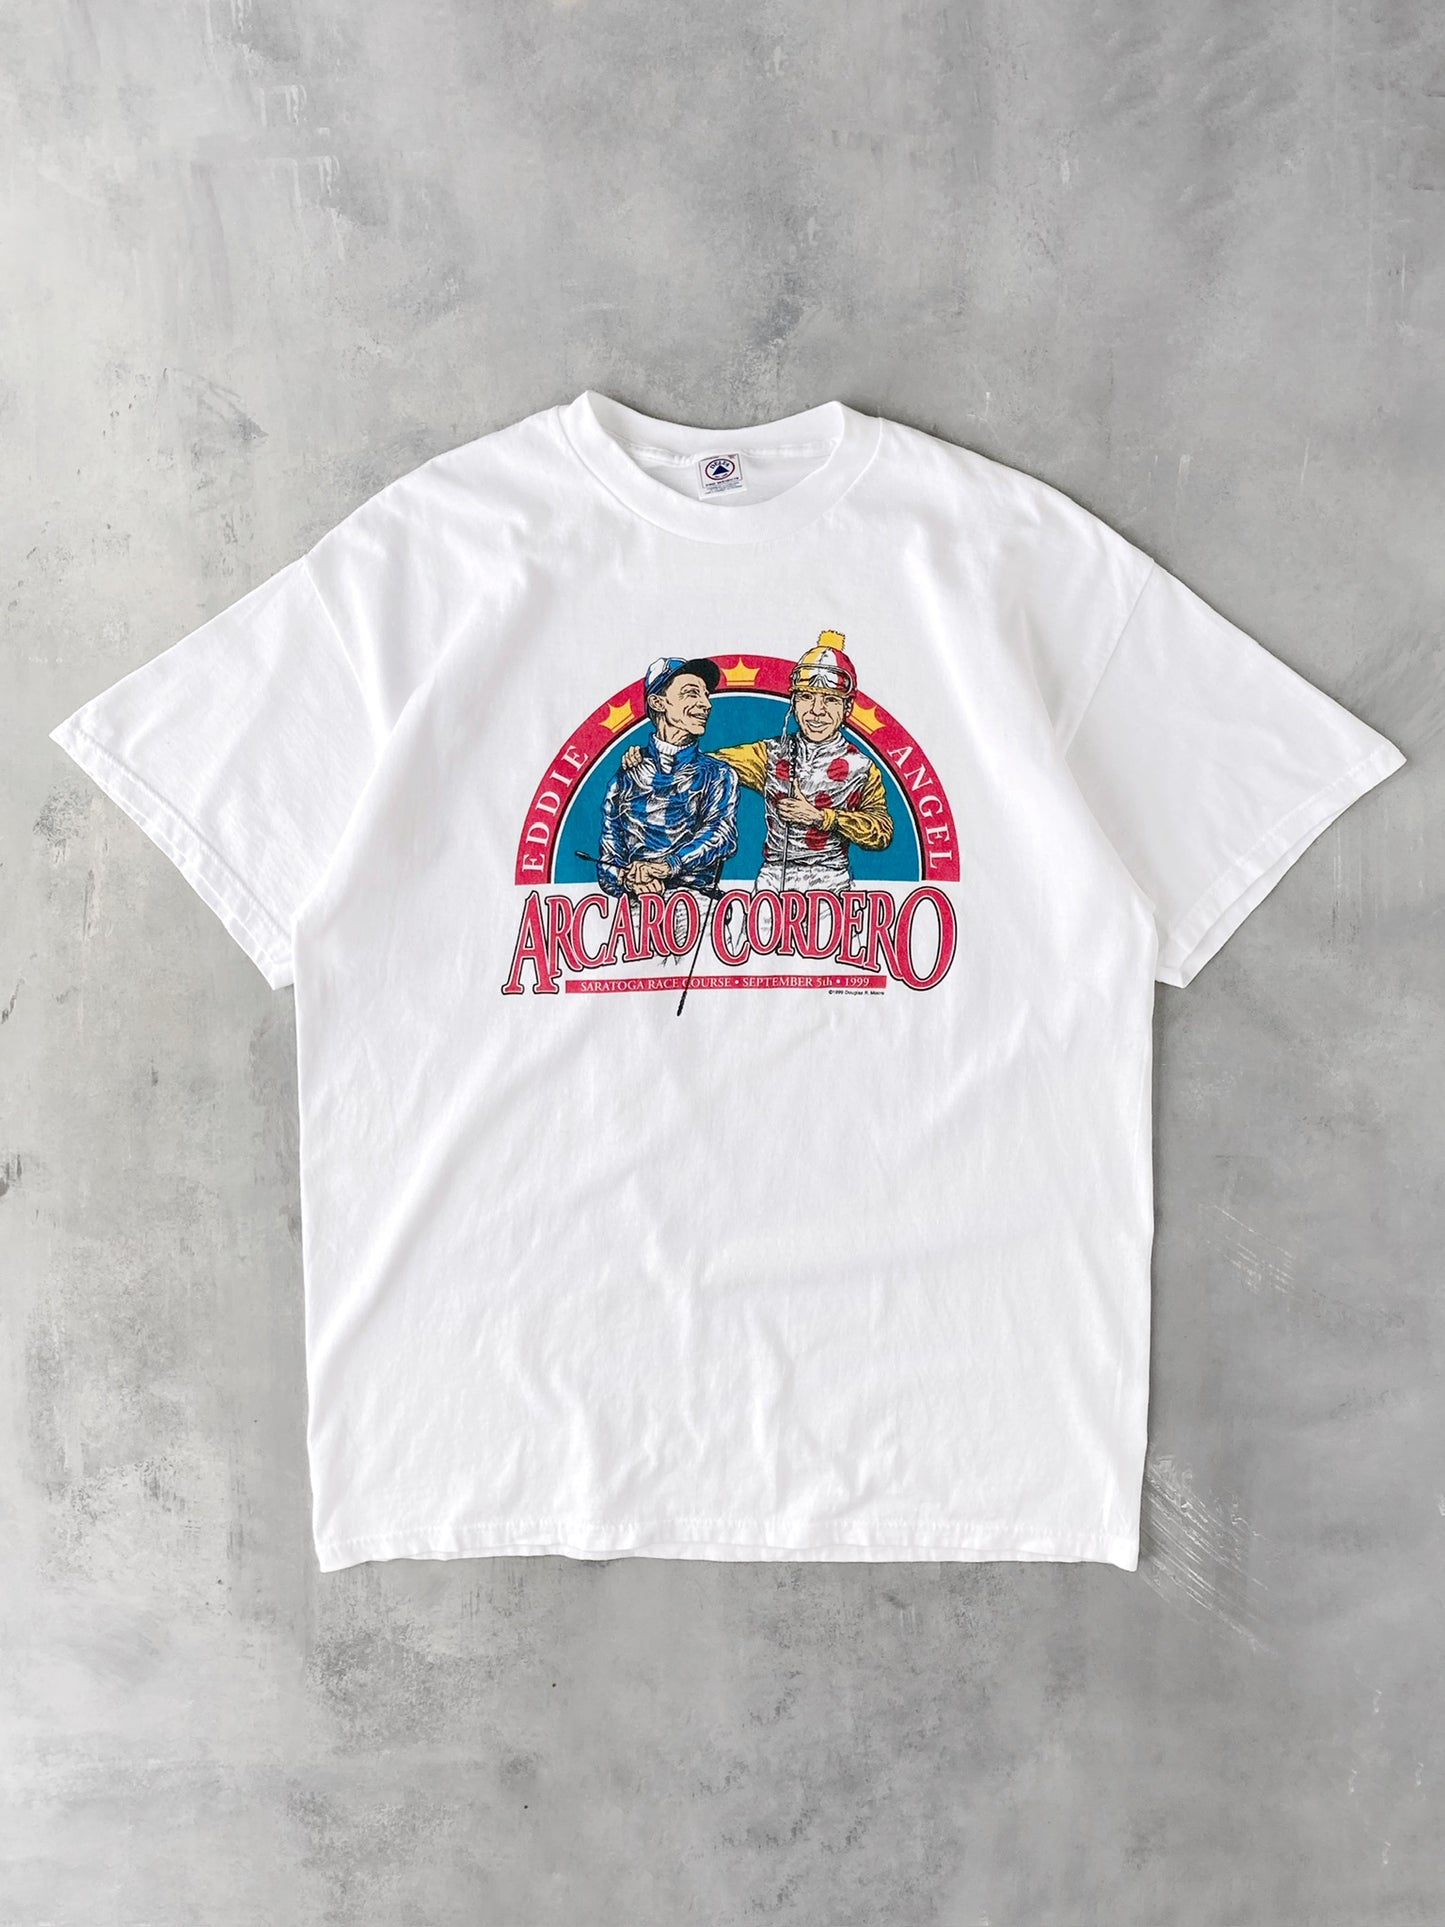 Saratoga Arcaro and Cordero T-Shirt '99 - XL